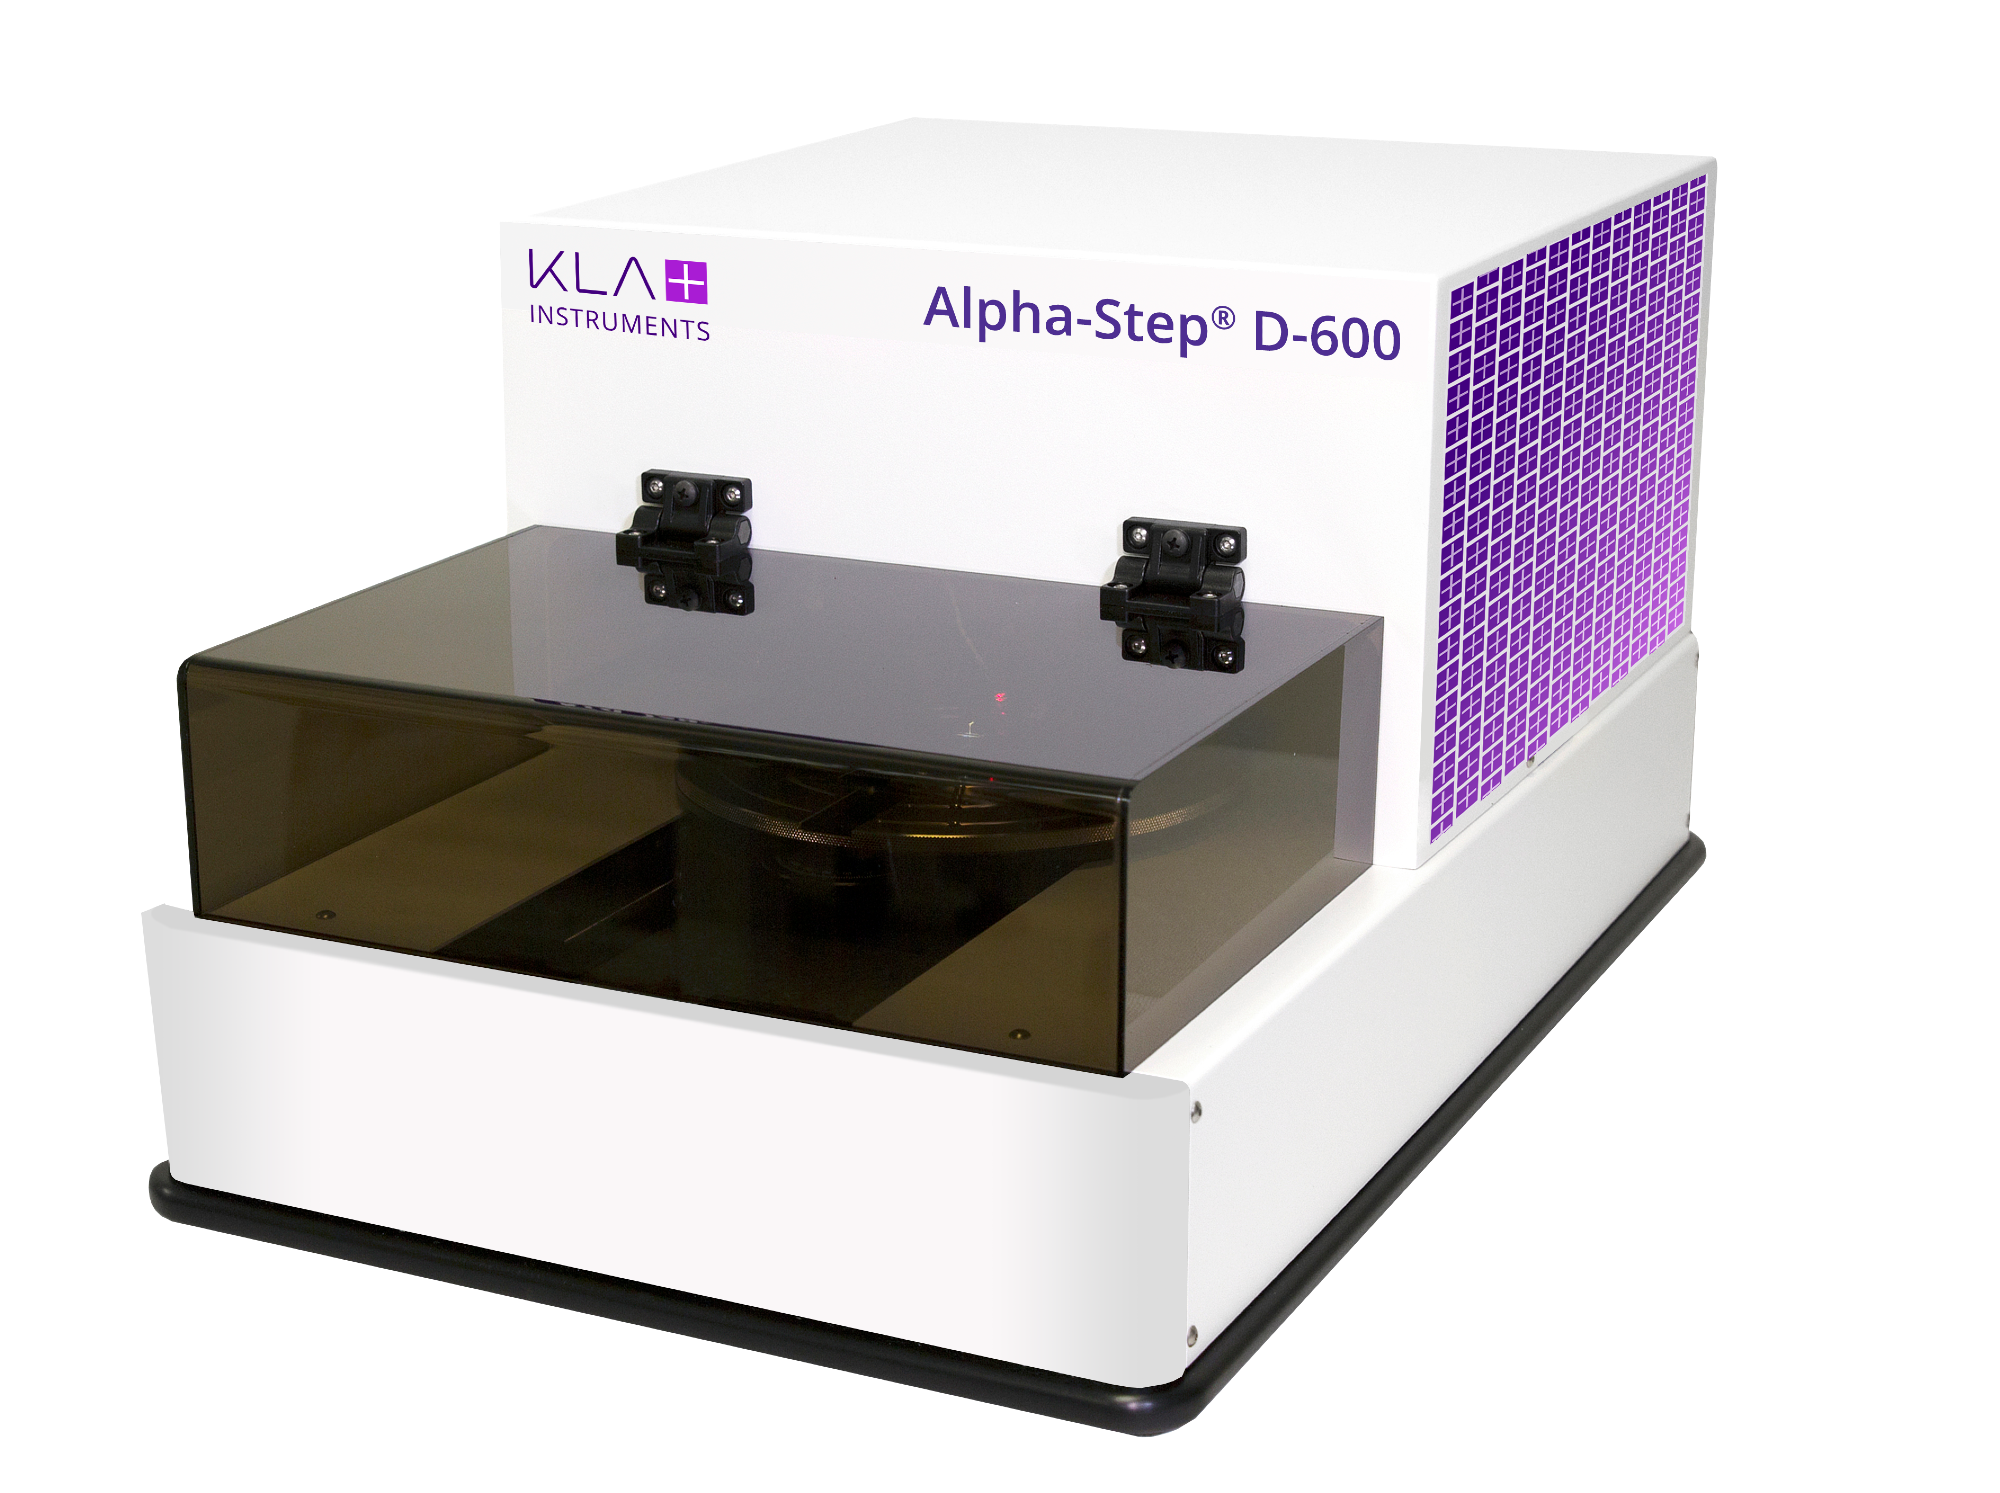 The Alpha-Step® D-600 Stylus Profiler from KLA Instruments™